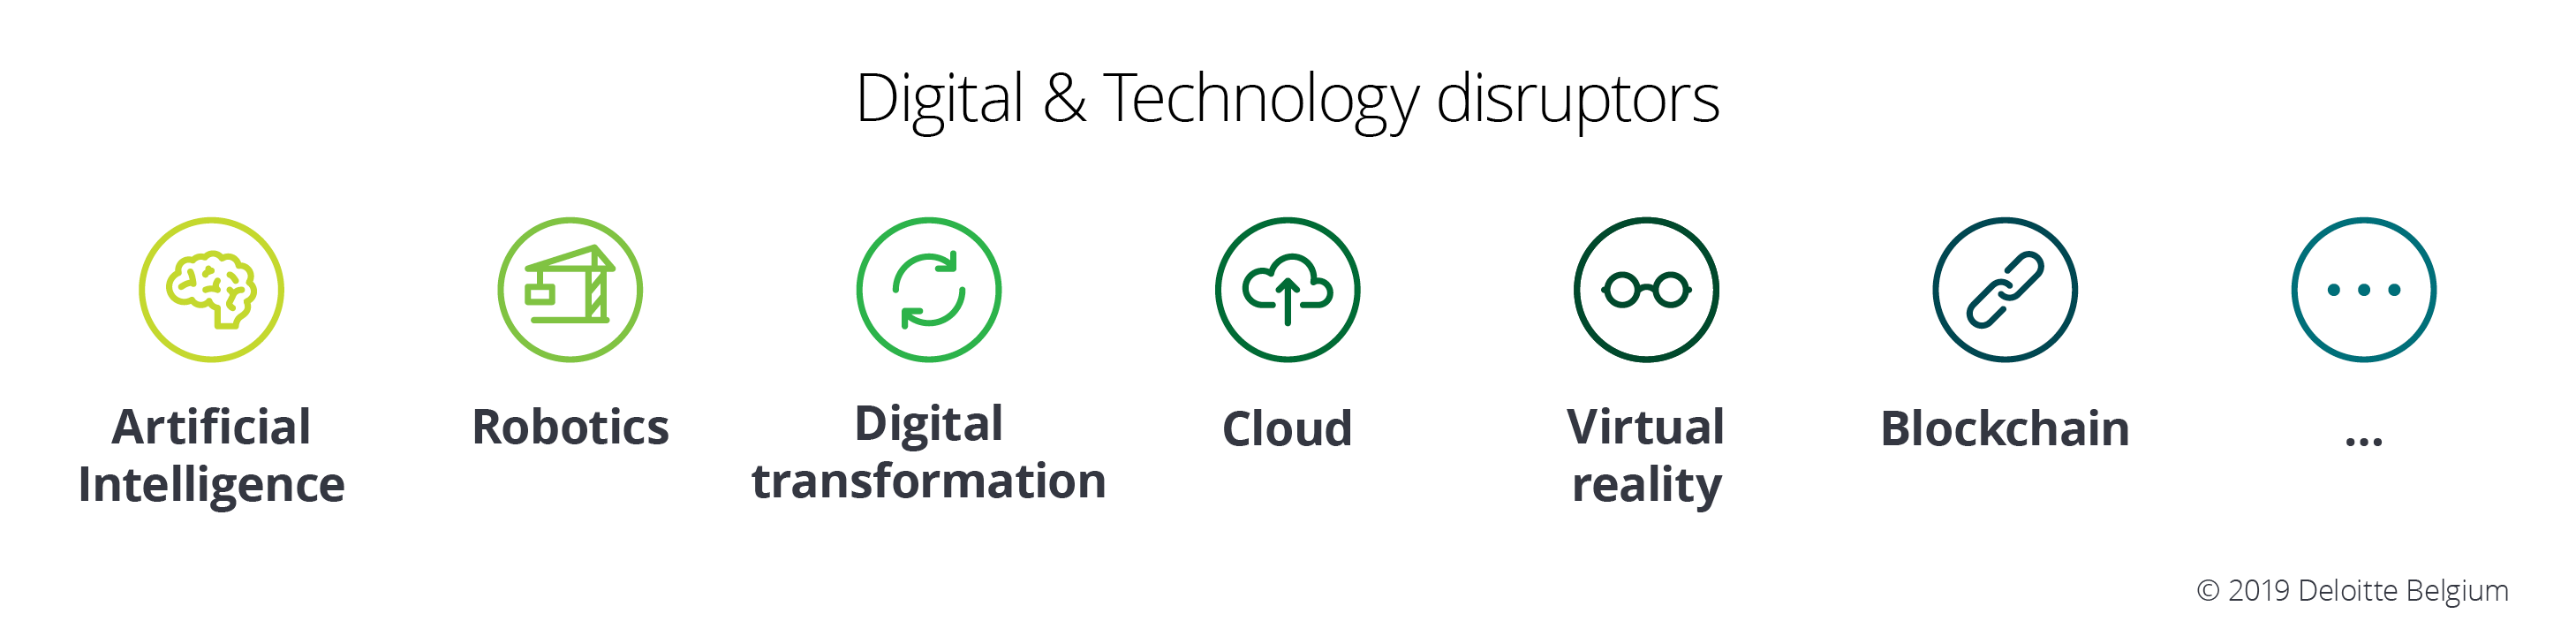 Digital & Technology disruptors